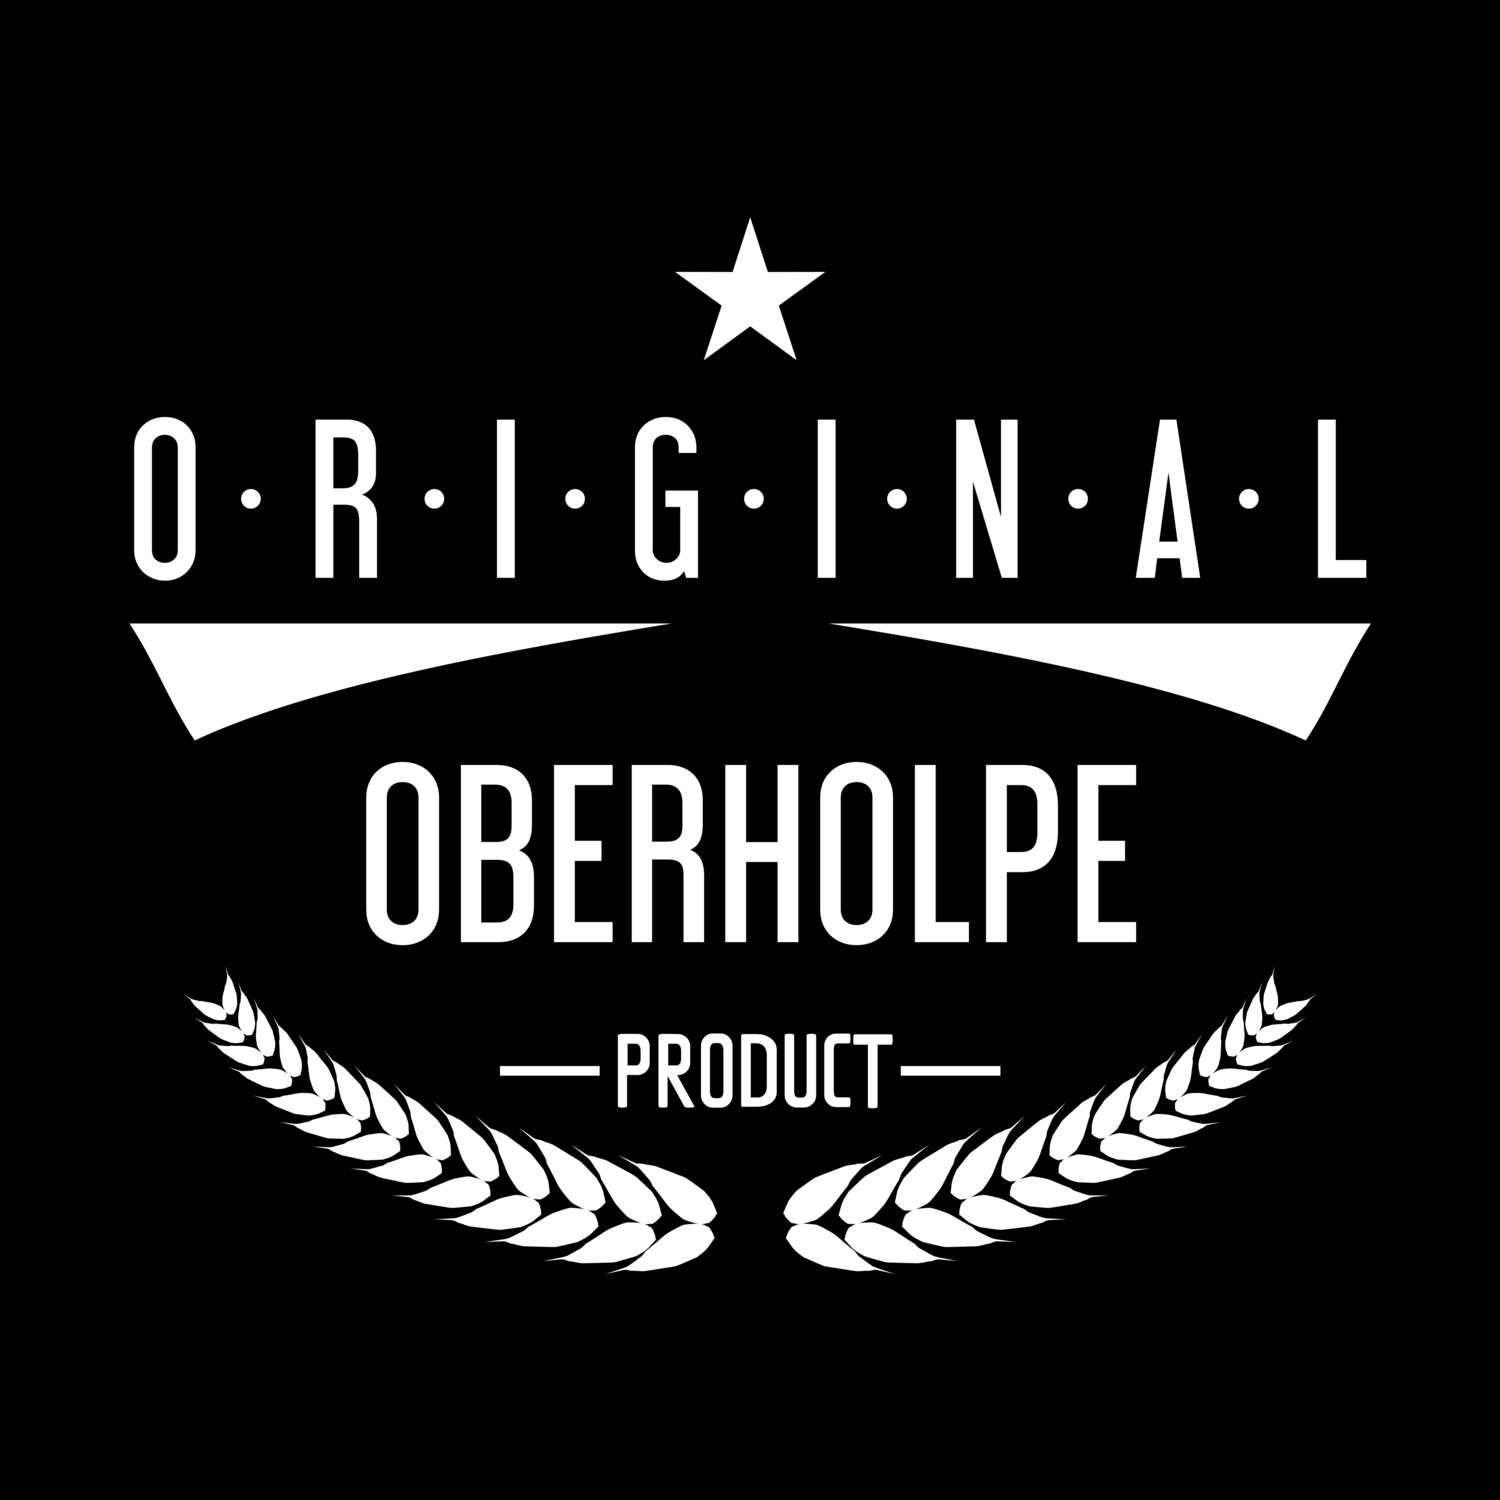 Oberholpe T-Shirt »Original Product«